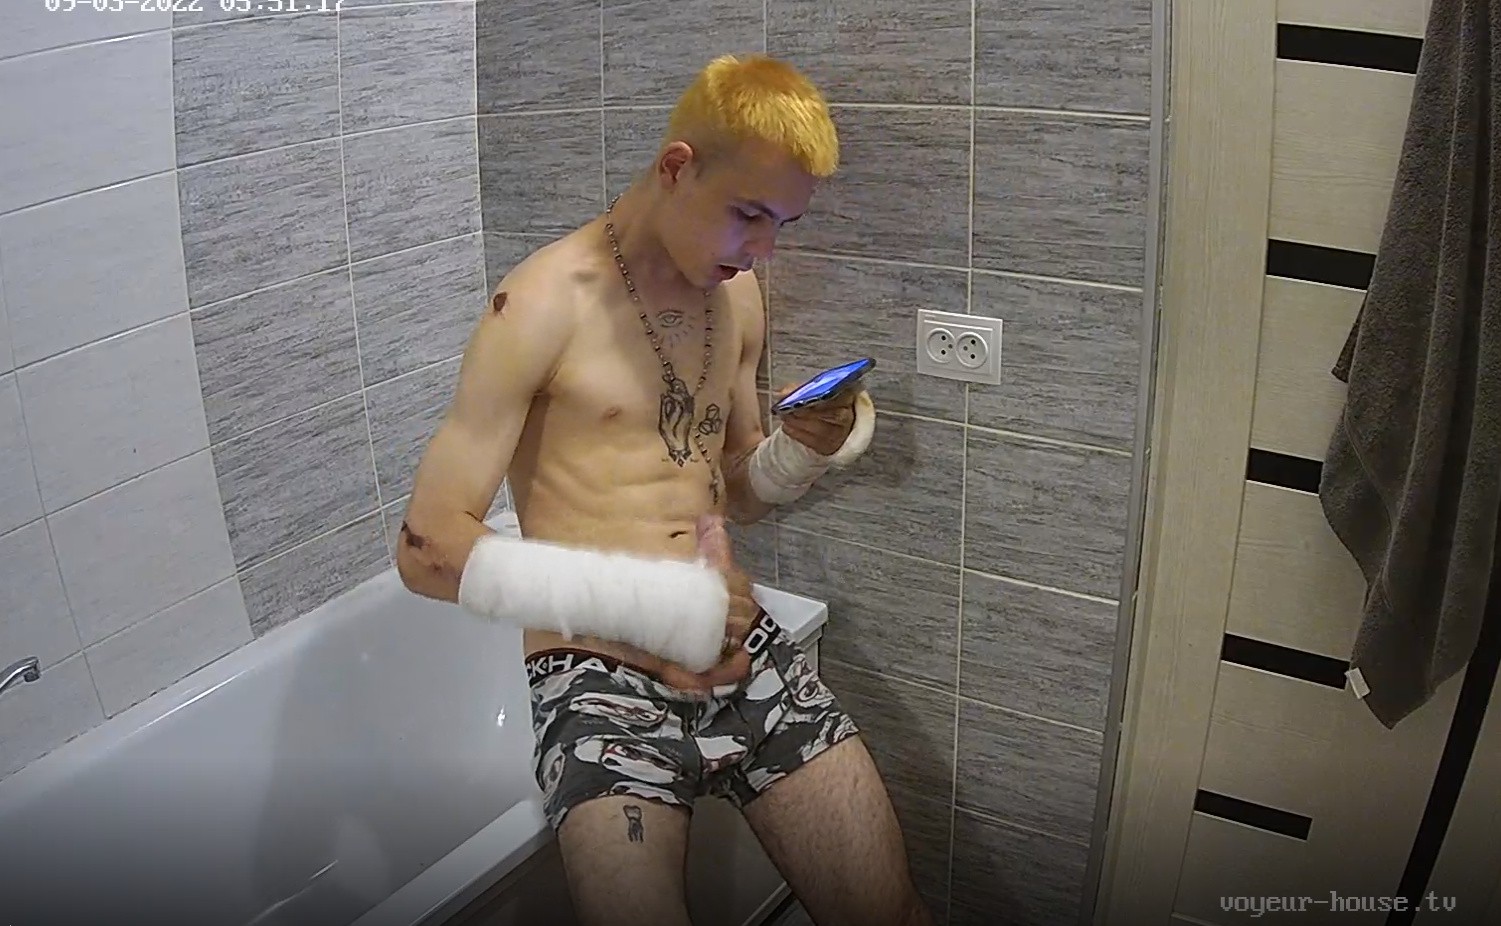 Artem jerking off in the bathroom 3 Sep 2022